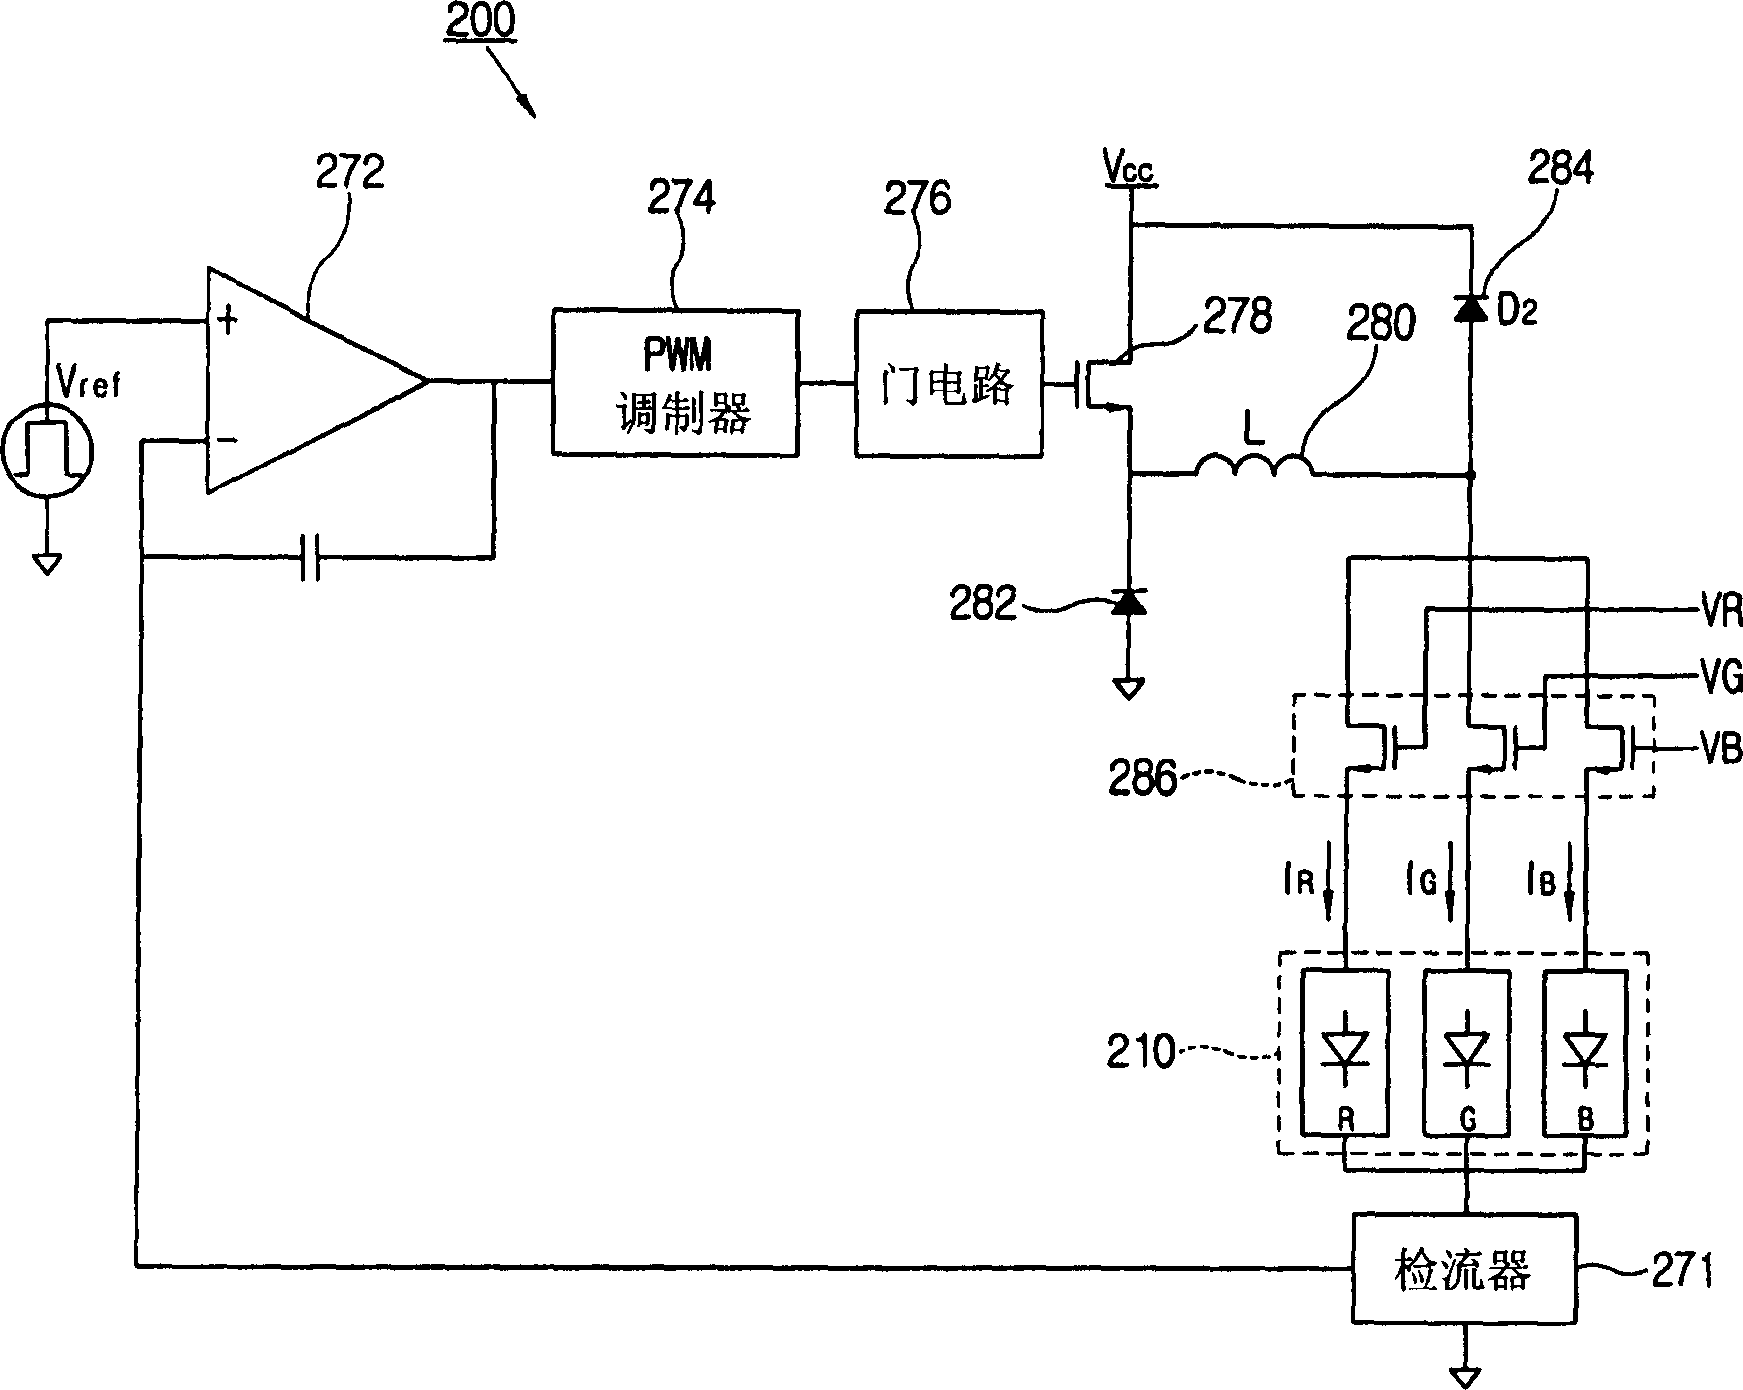 Light emitting diode (led) driver